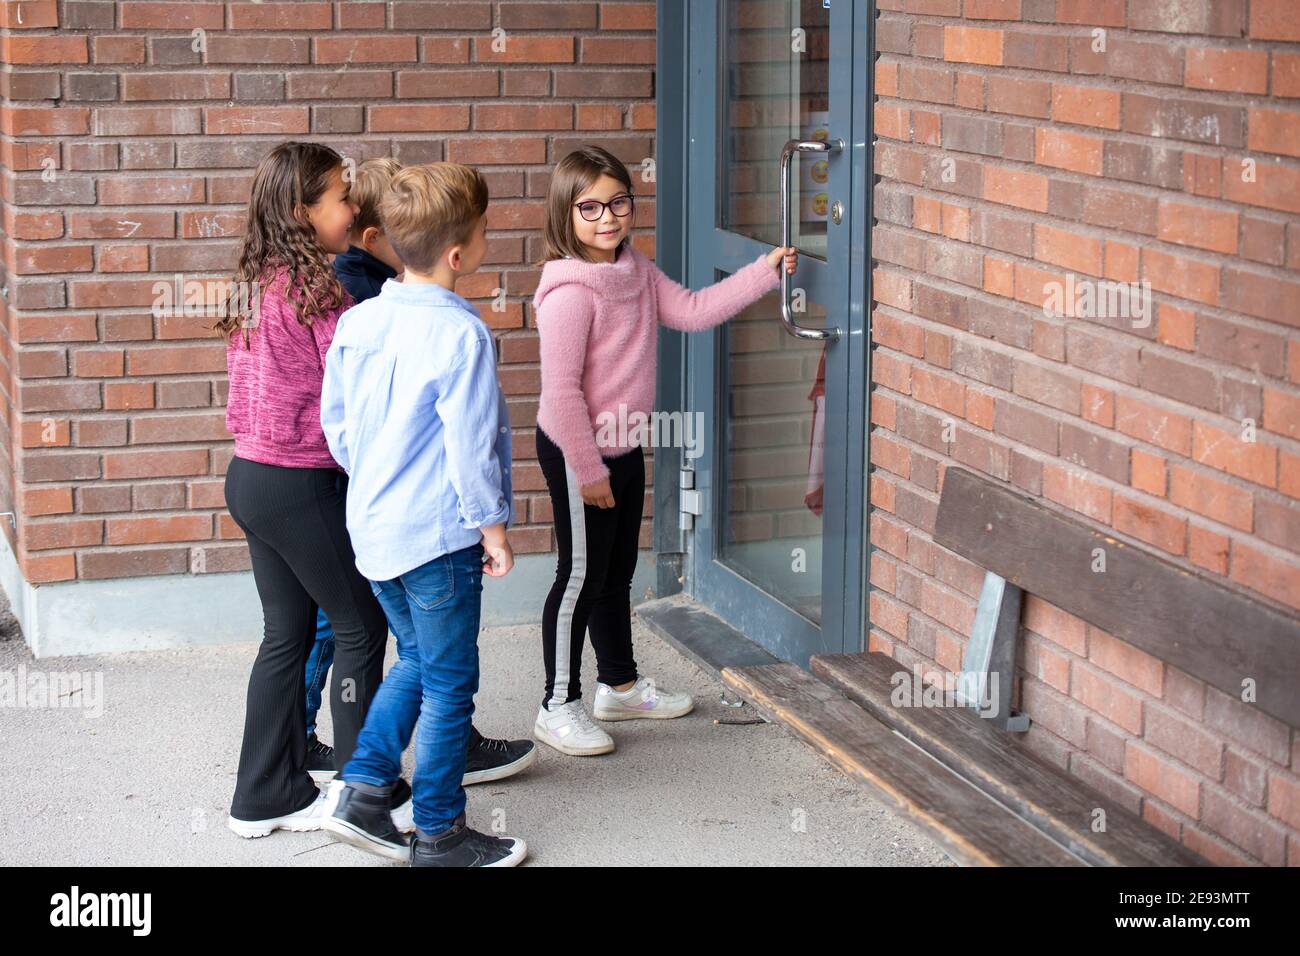 Children entering school Stock Photo